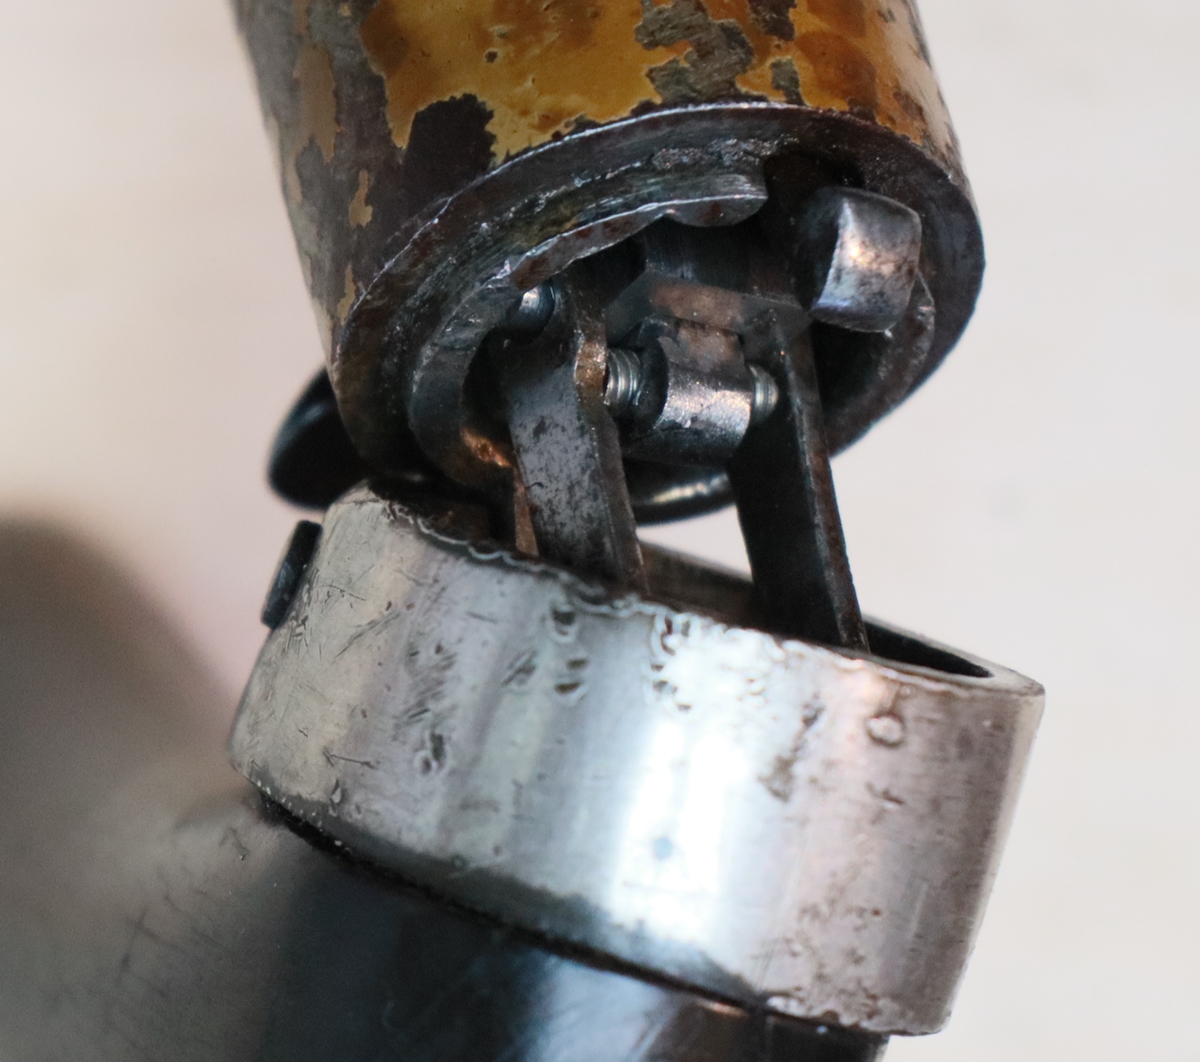 Antique Firearms Restoration Blog – … and C19 gun engraving